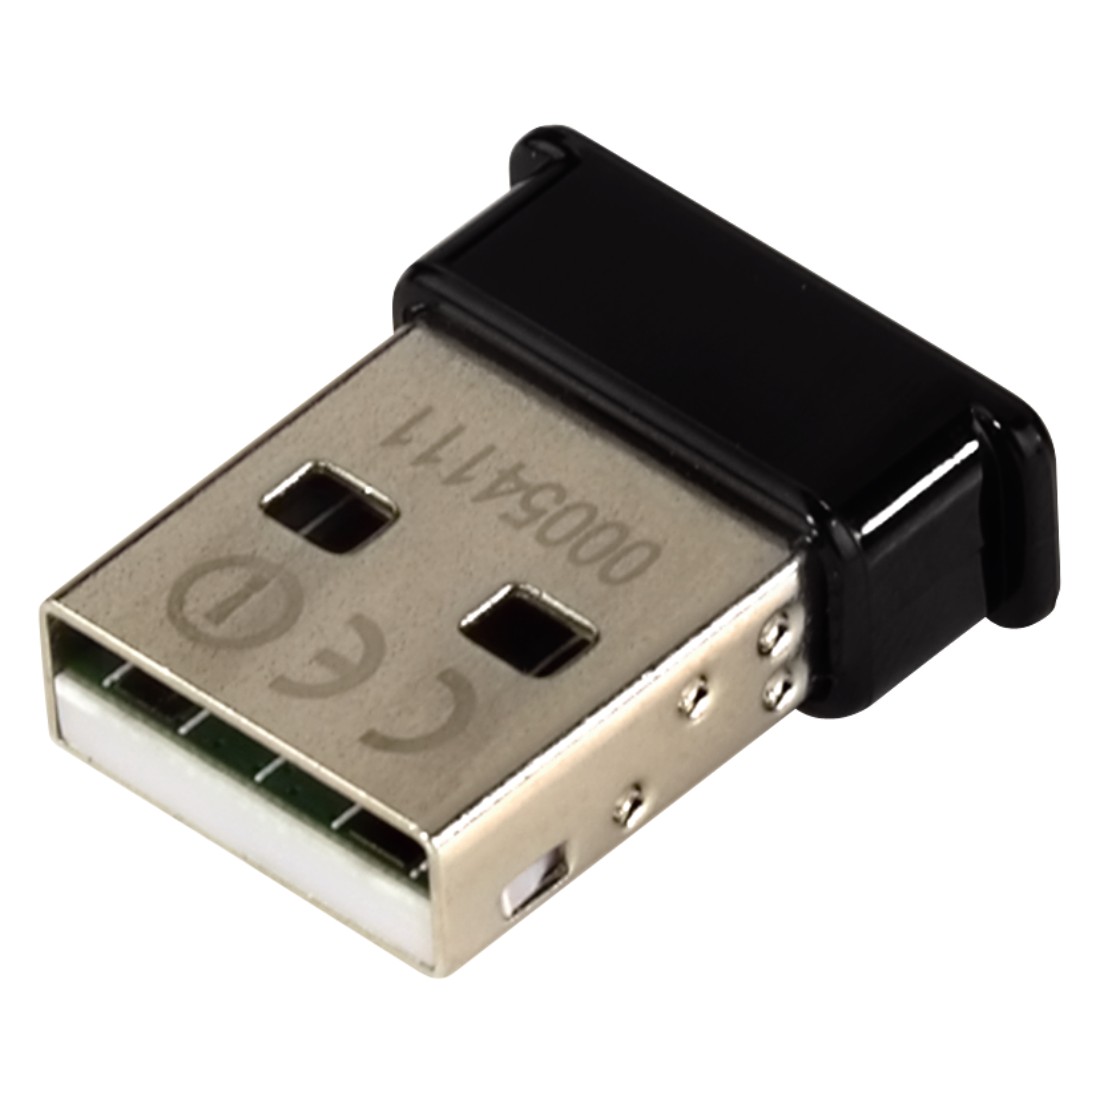 Hama N150 Nano WLAN USB Stick, 2.4 GHz